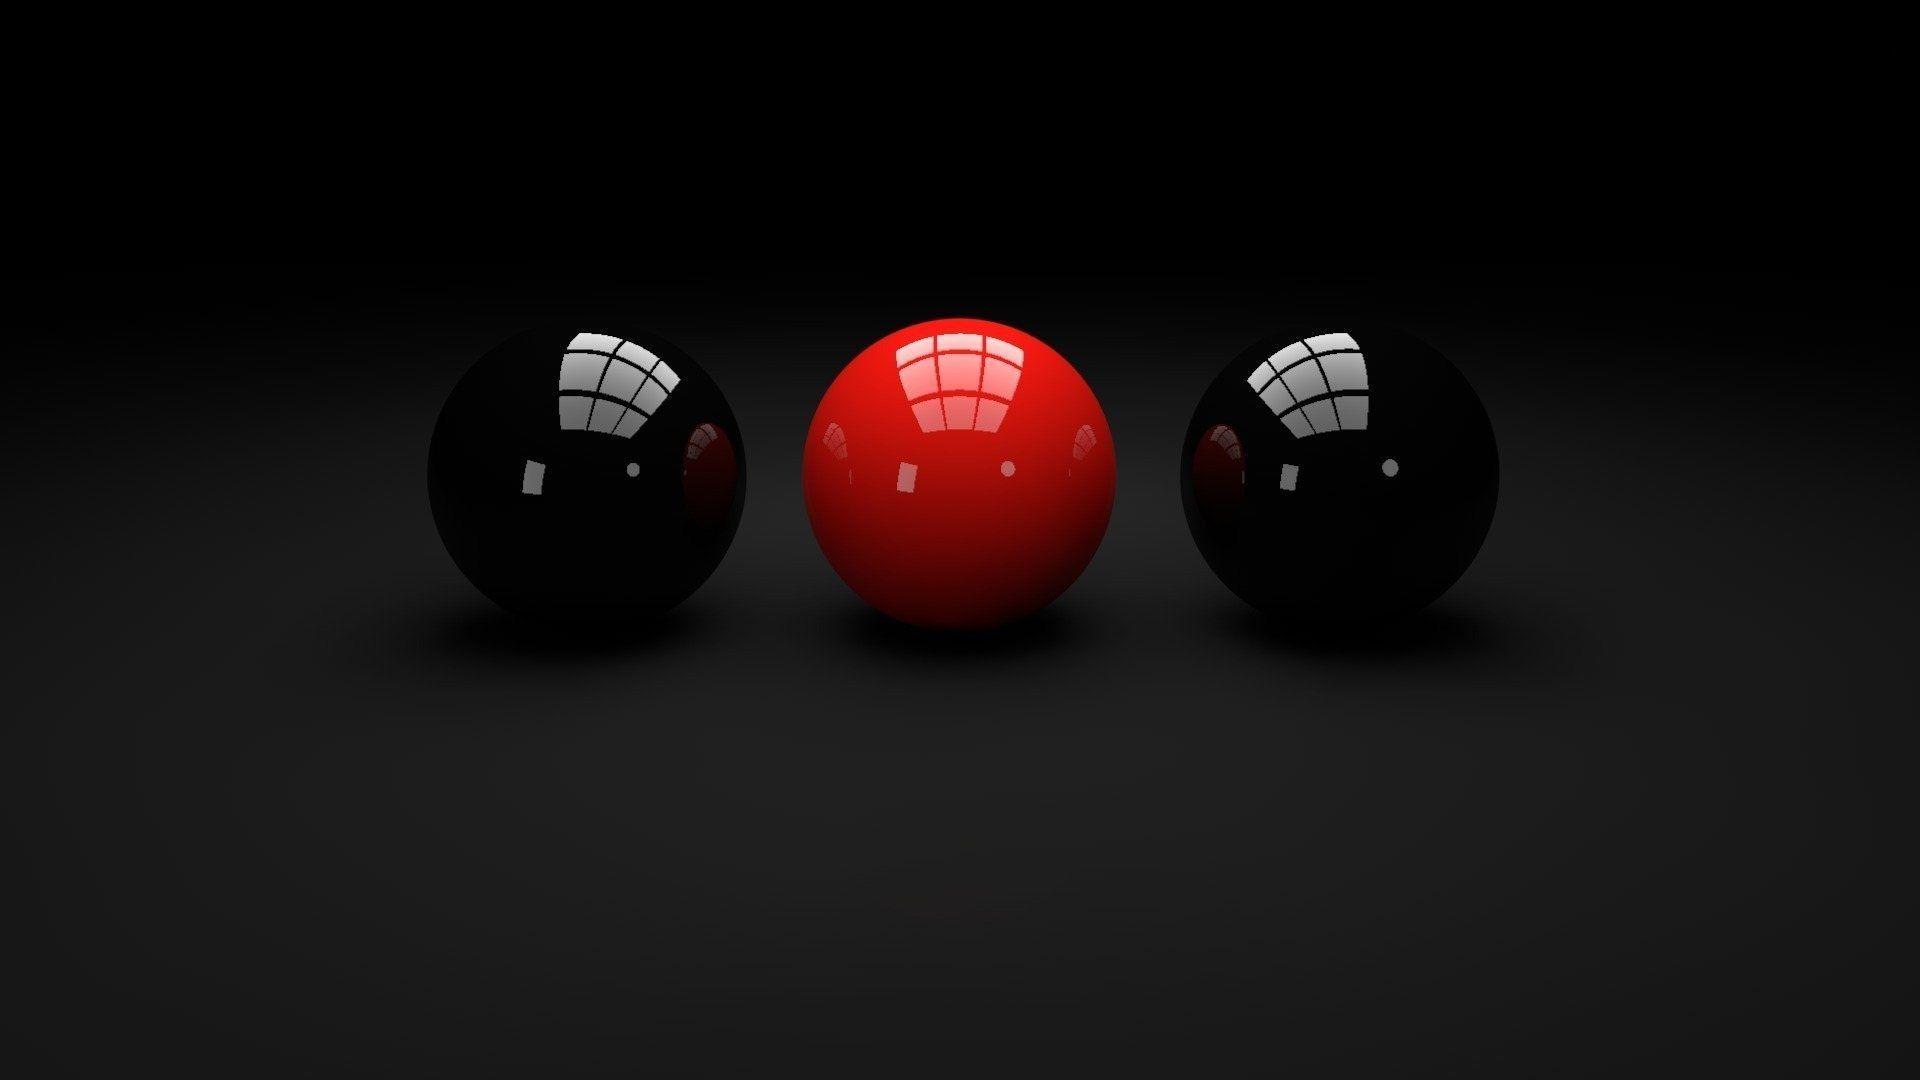 Snooker black and red balls wallpaper download. Wallpaper